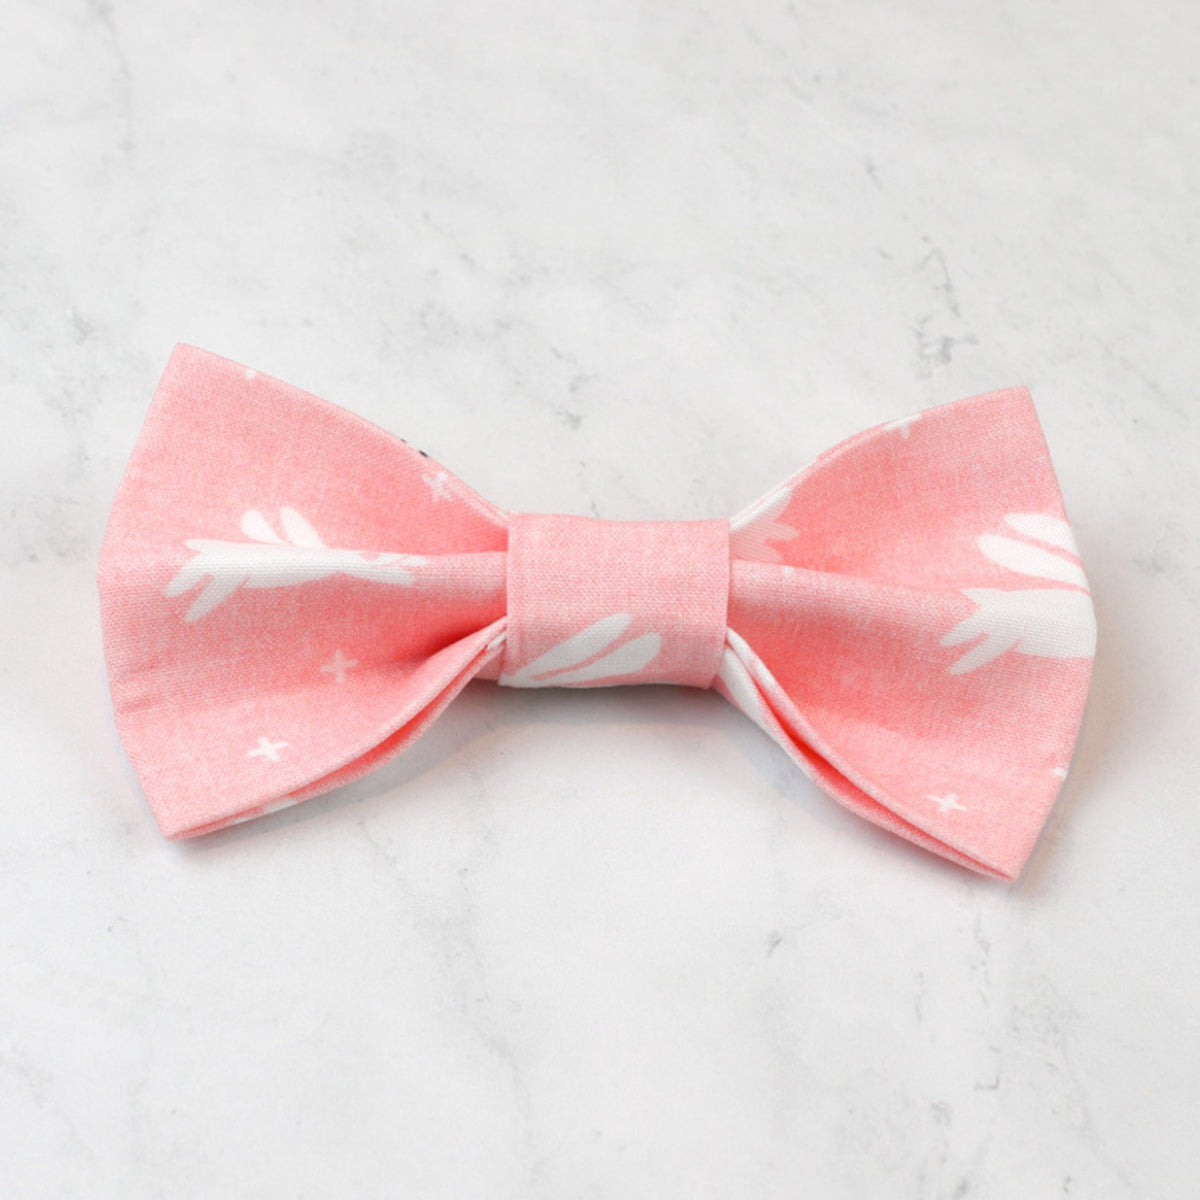 pink bunny dog bow tie